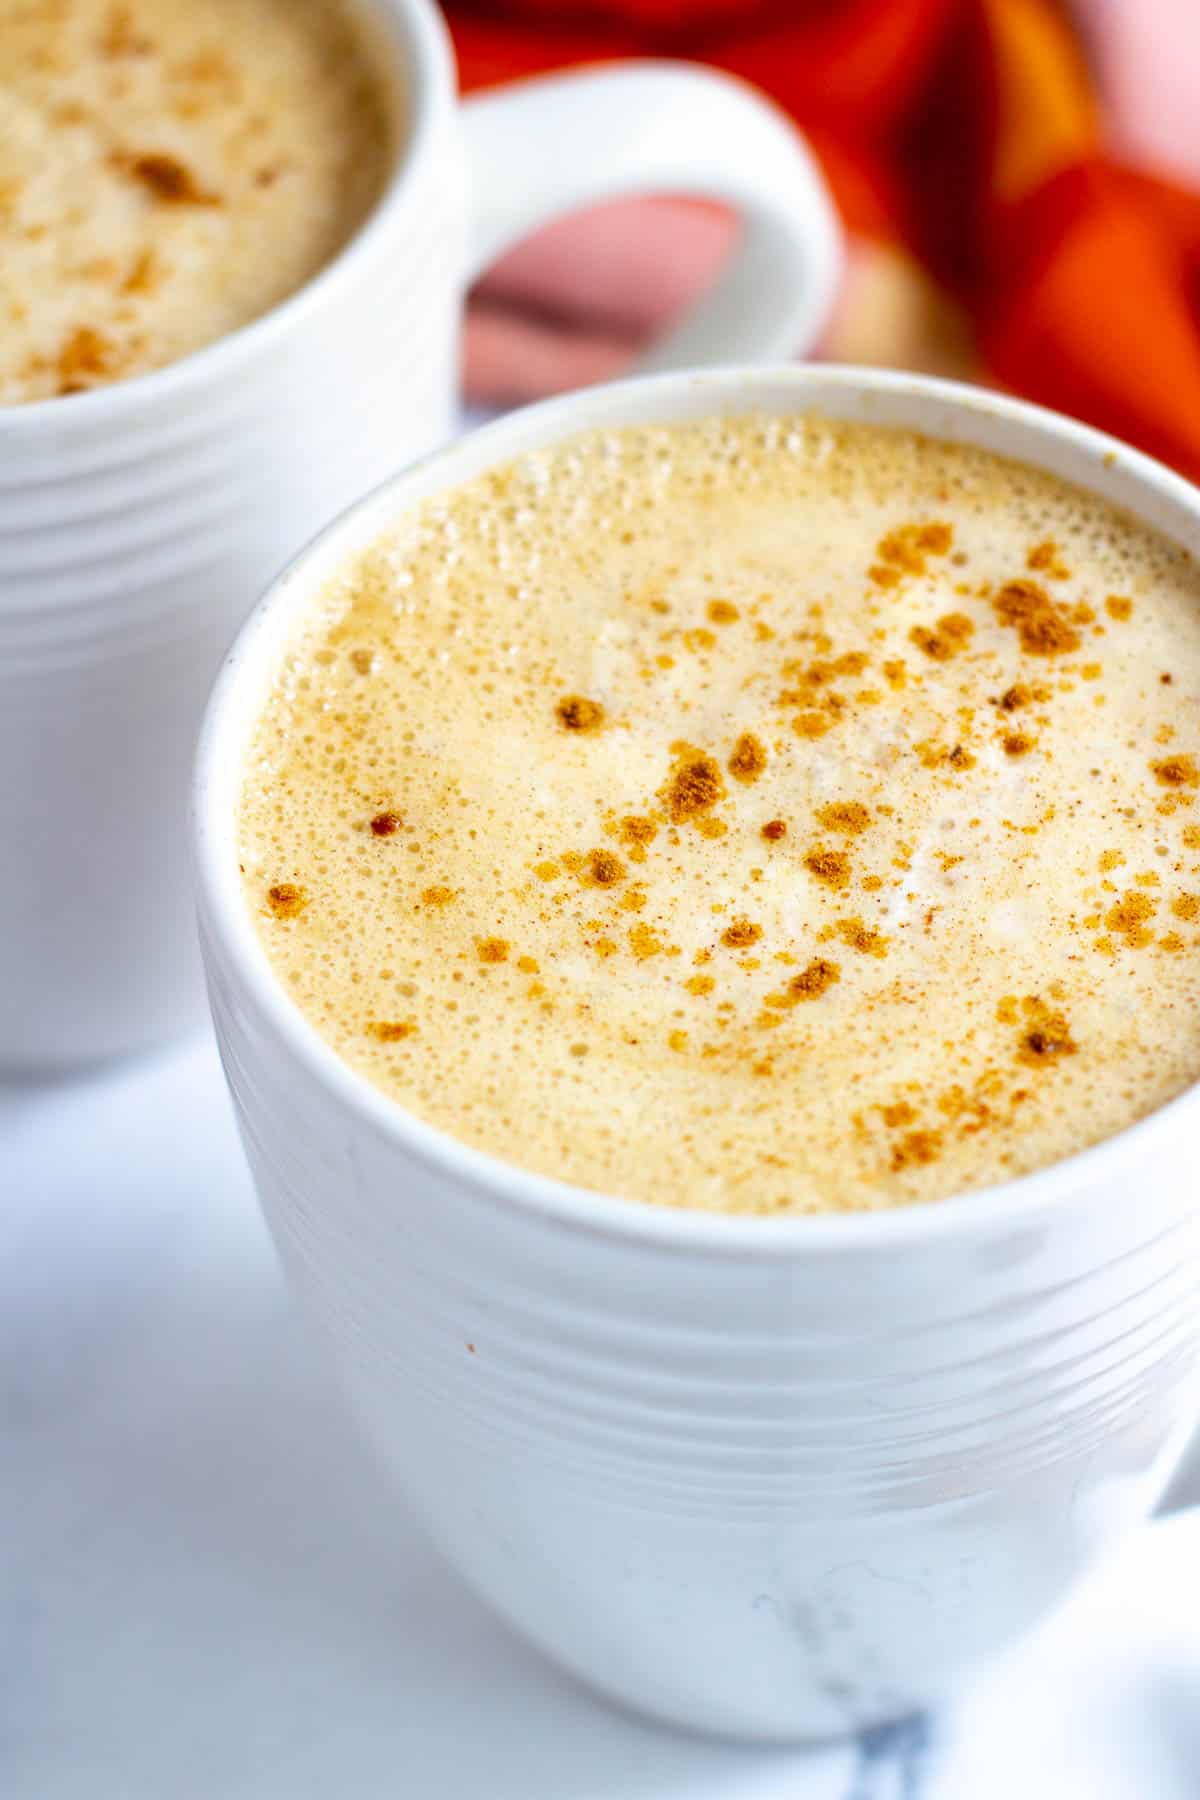 Pumpkin latte in white mug.